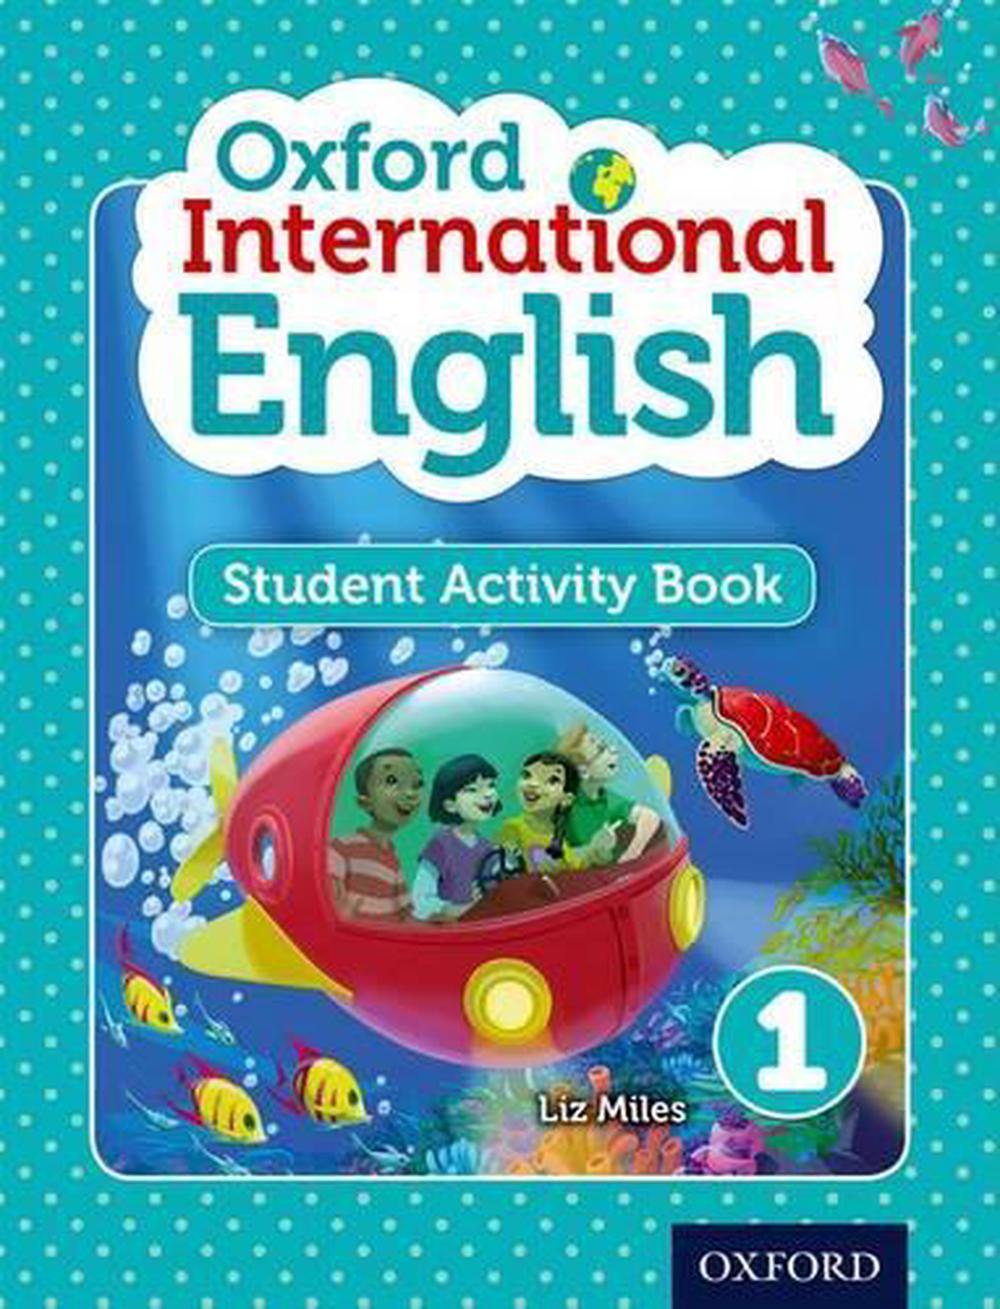 Oxford International English Student Activity Book 1 by Miles, Liz